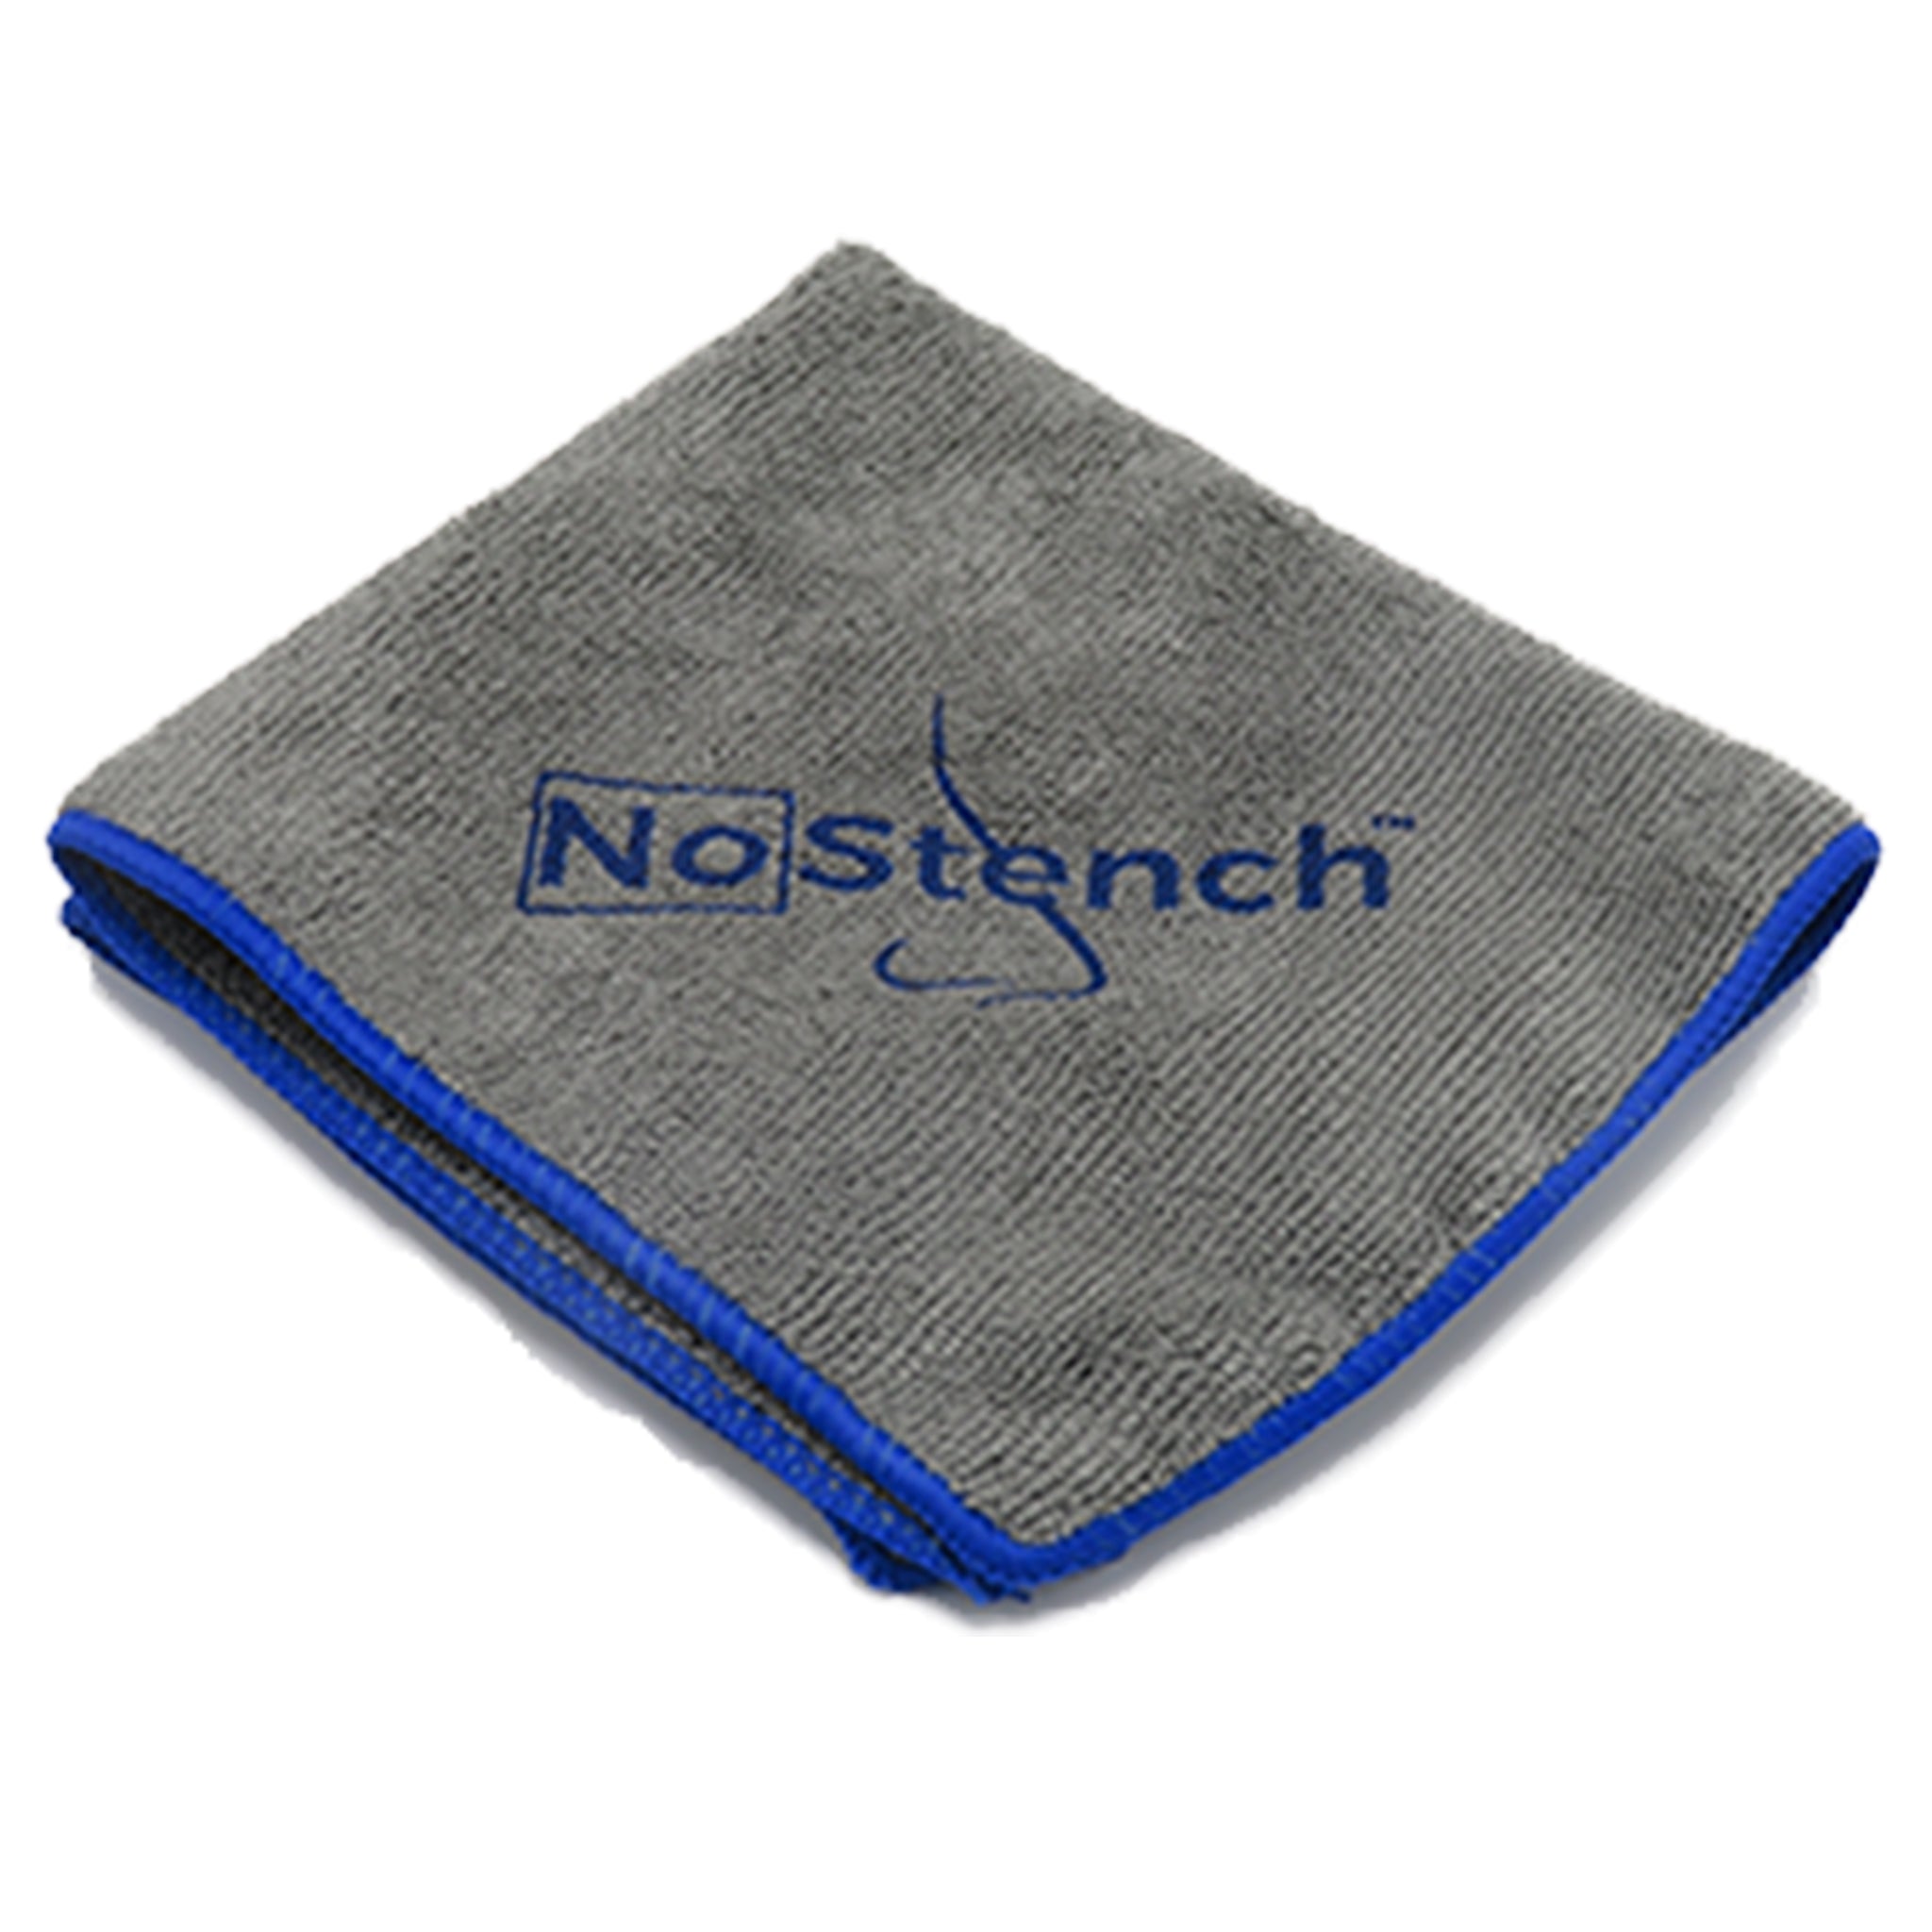 Anti Fog microfiber cloth - Nobraa